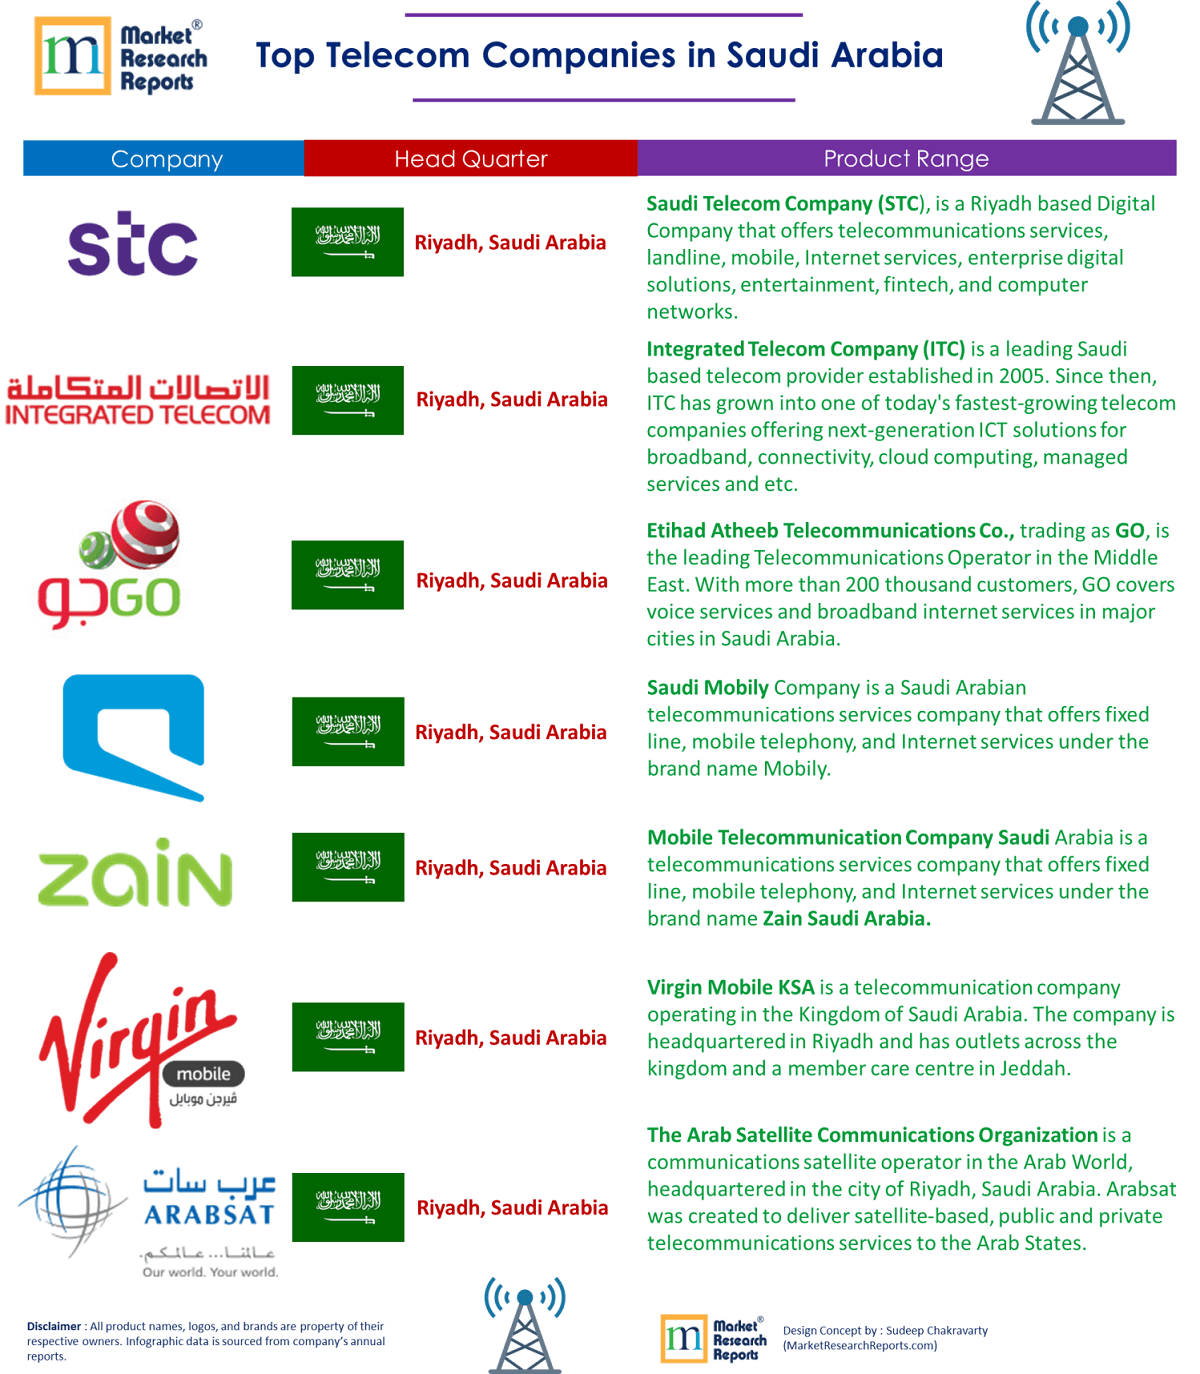 Top Telecom Companies in Saudi Arabia